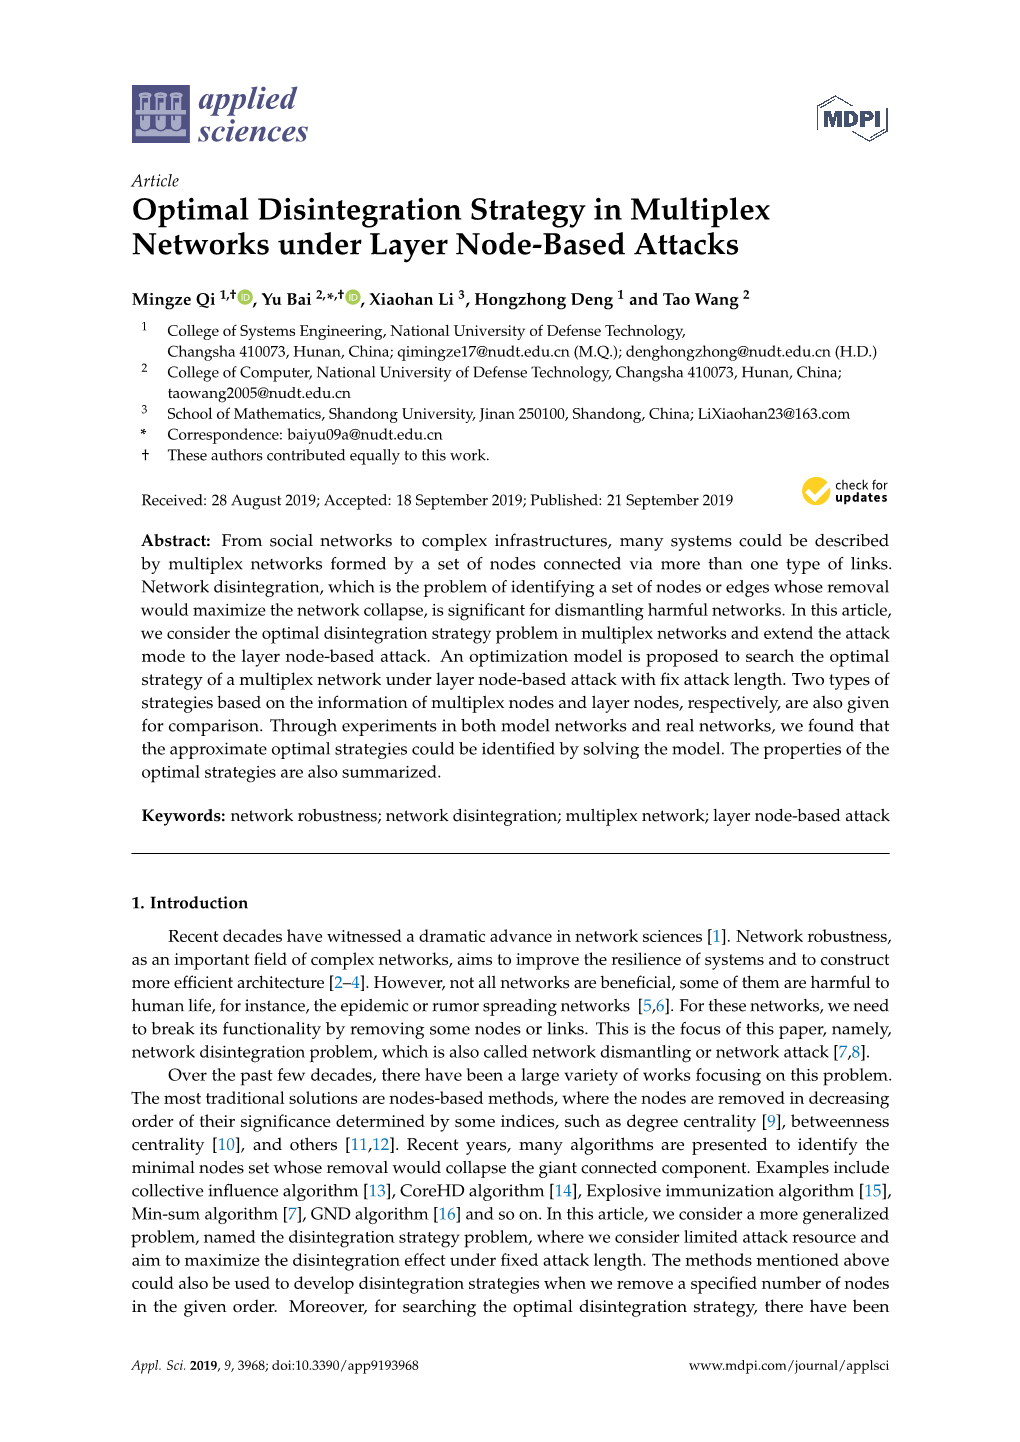 Optimal Disintegration Strategy in Multiplex Networks Under Layer Node-Based Attacks